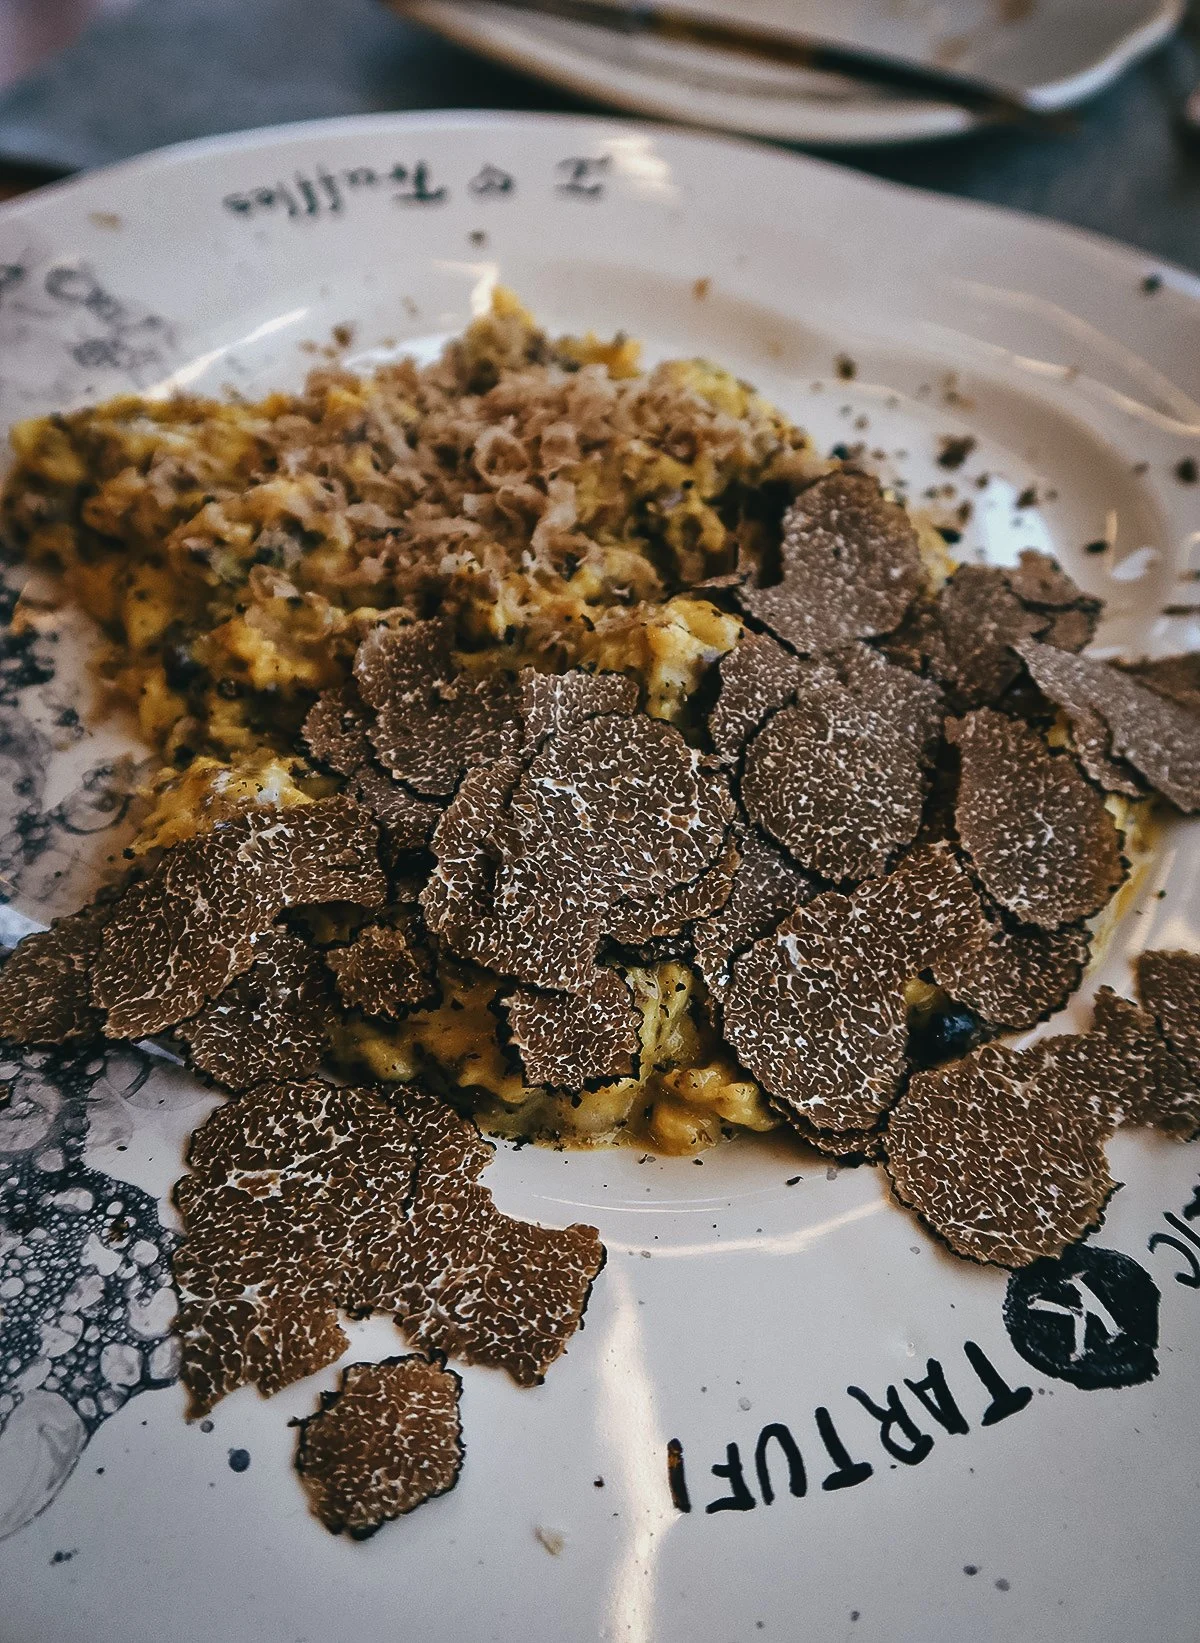 Scrambled eggs with black truffles